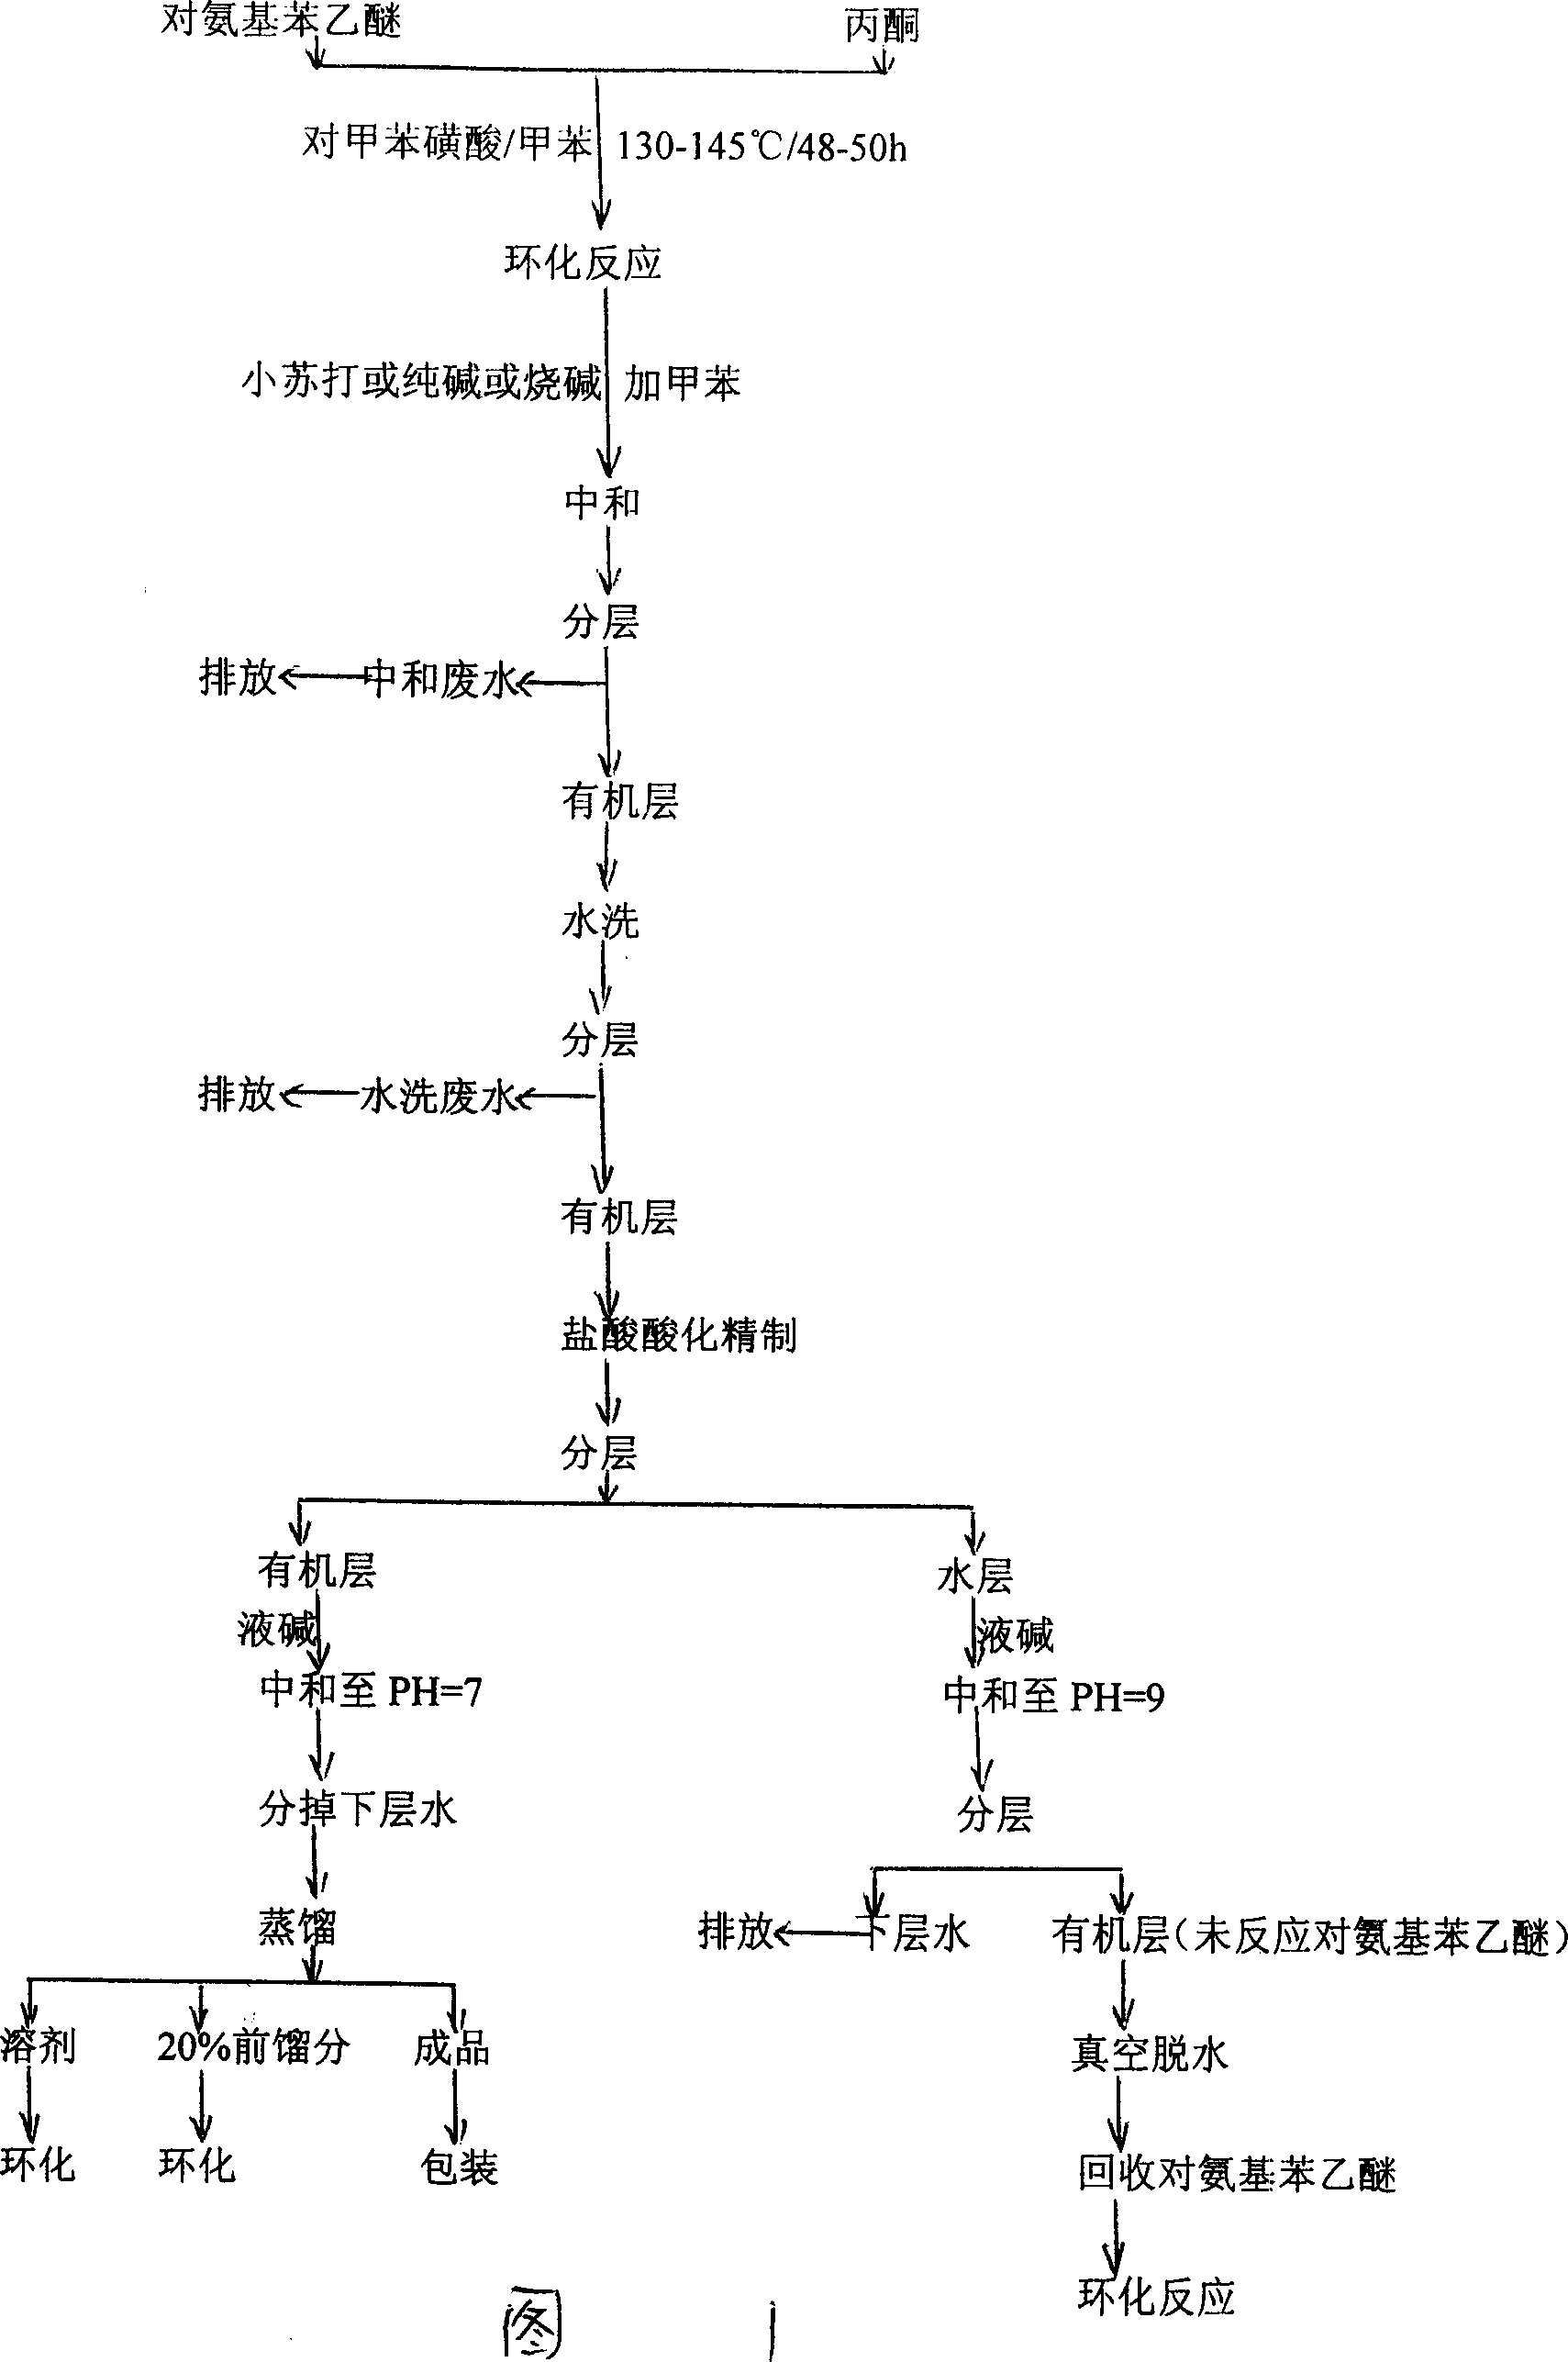 Method for composing ethoxy quinoline